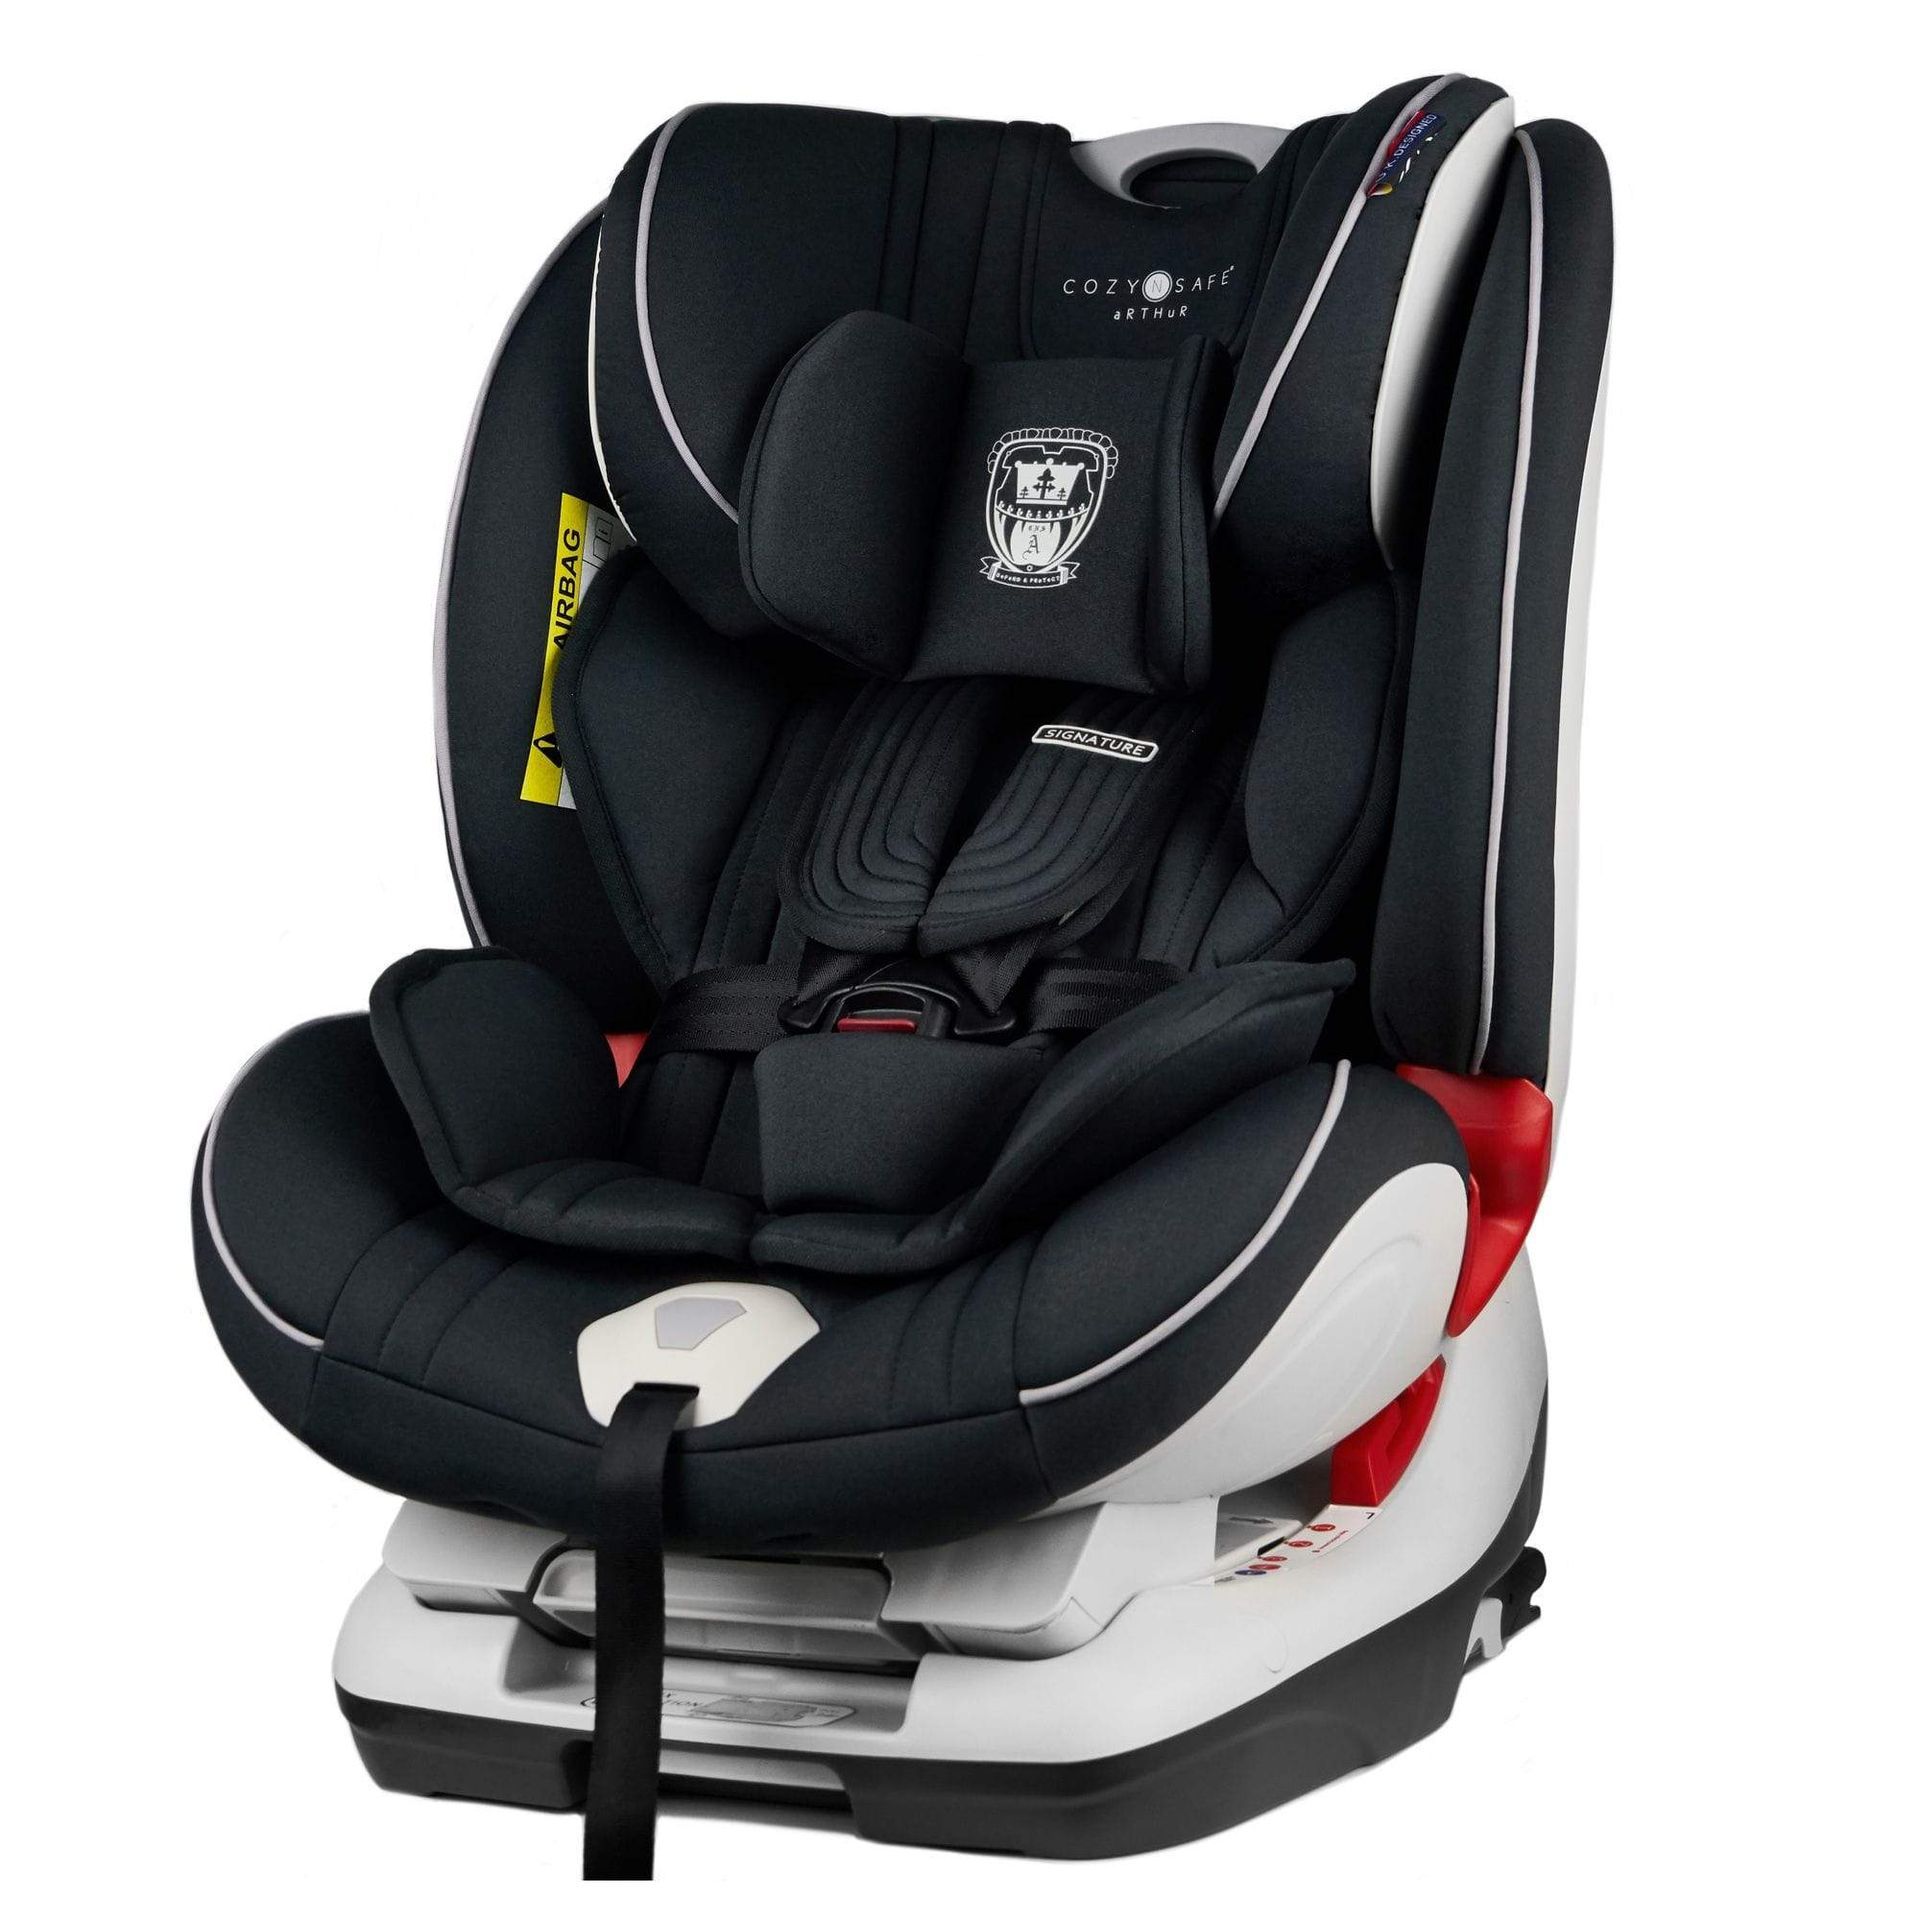 Rent Baby Car Seat in Palawan Puerto Princesa: Safe Car Rental Options for Families